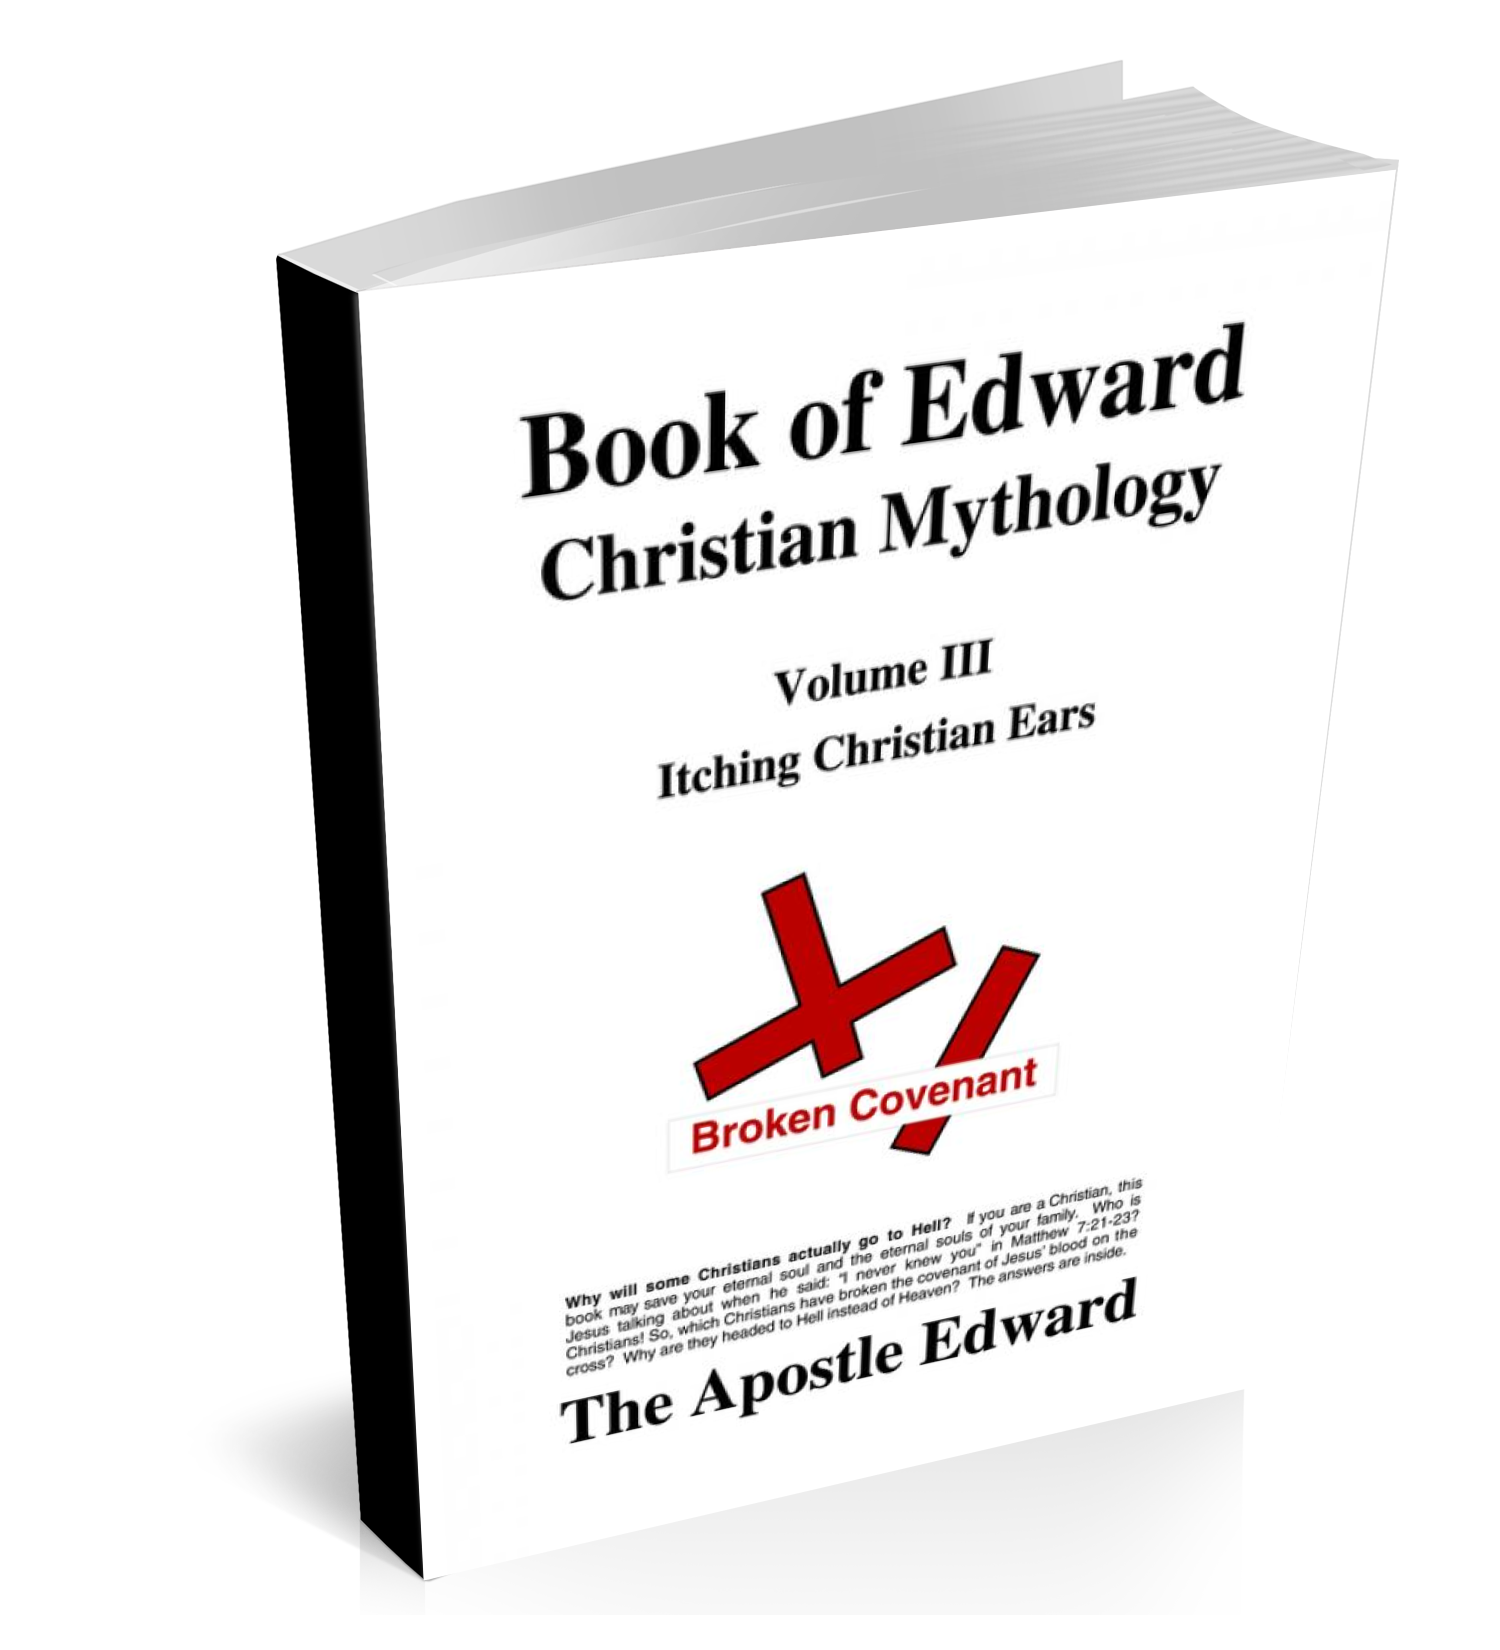 Image of Apostle Edward's Book of Edward Volume III